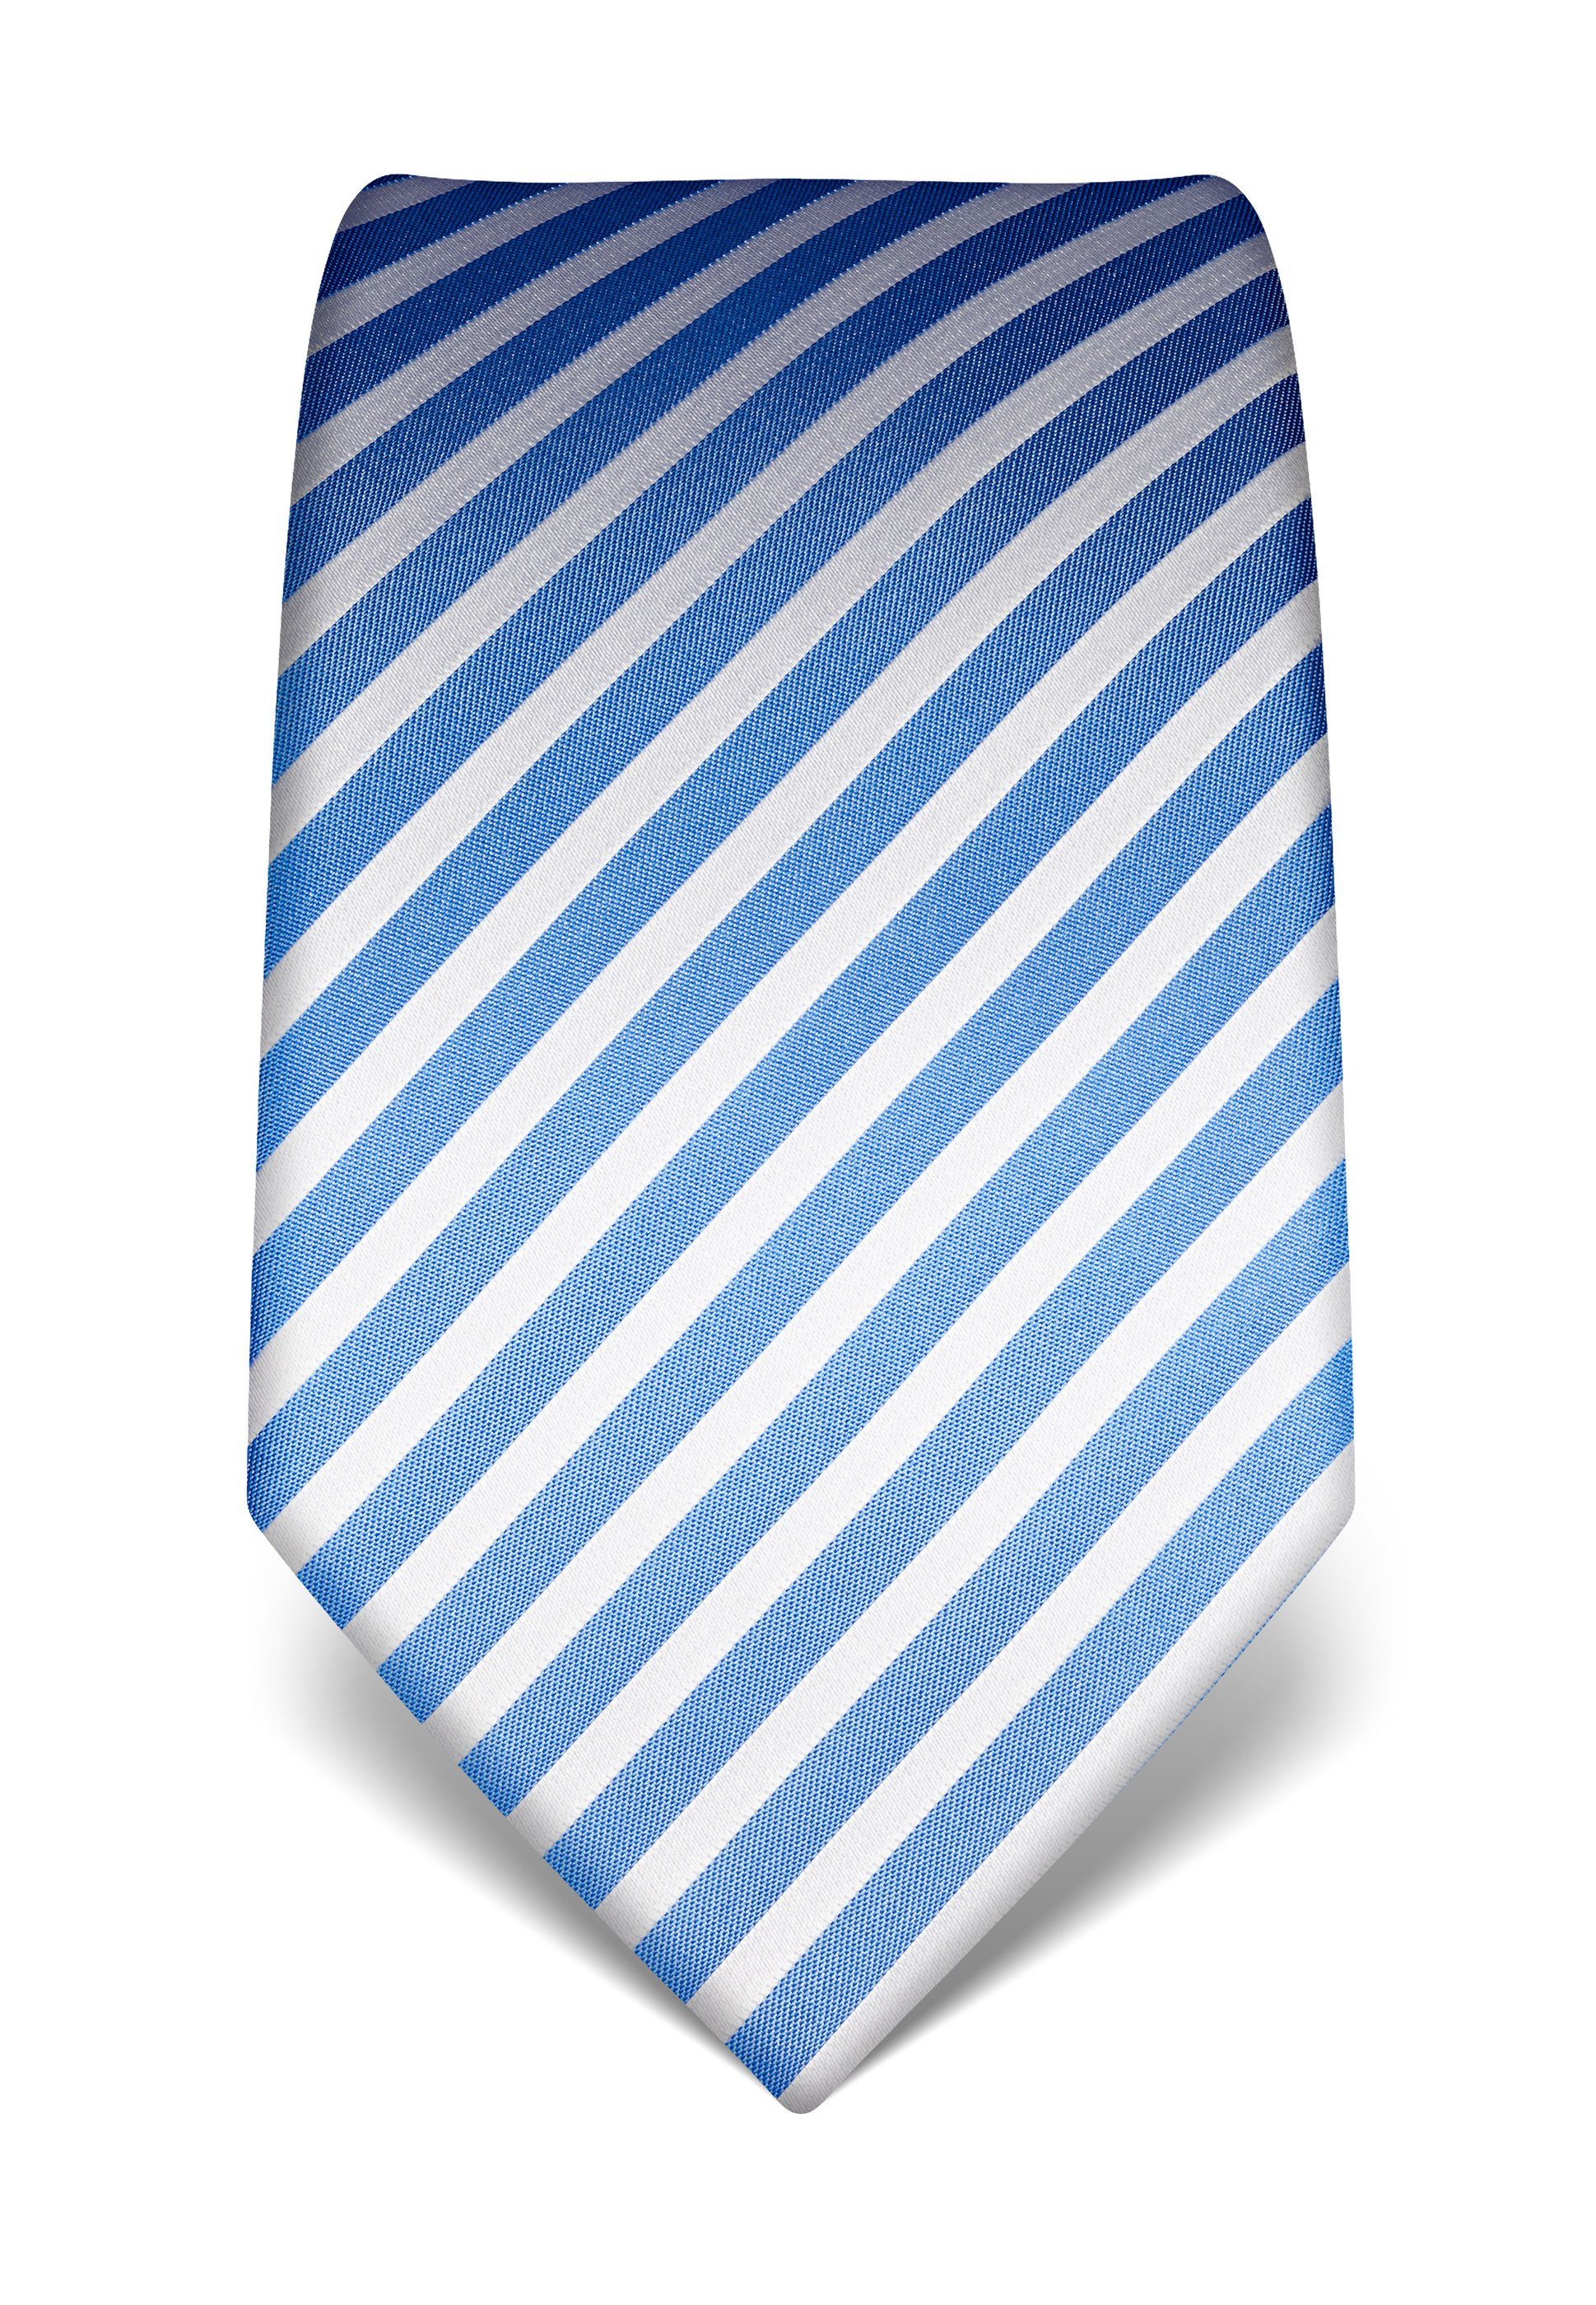 Vincenzo Boretti Krawatte gestreift blau/weiß